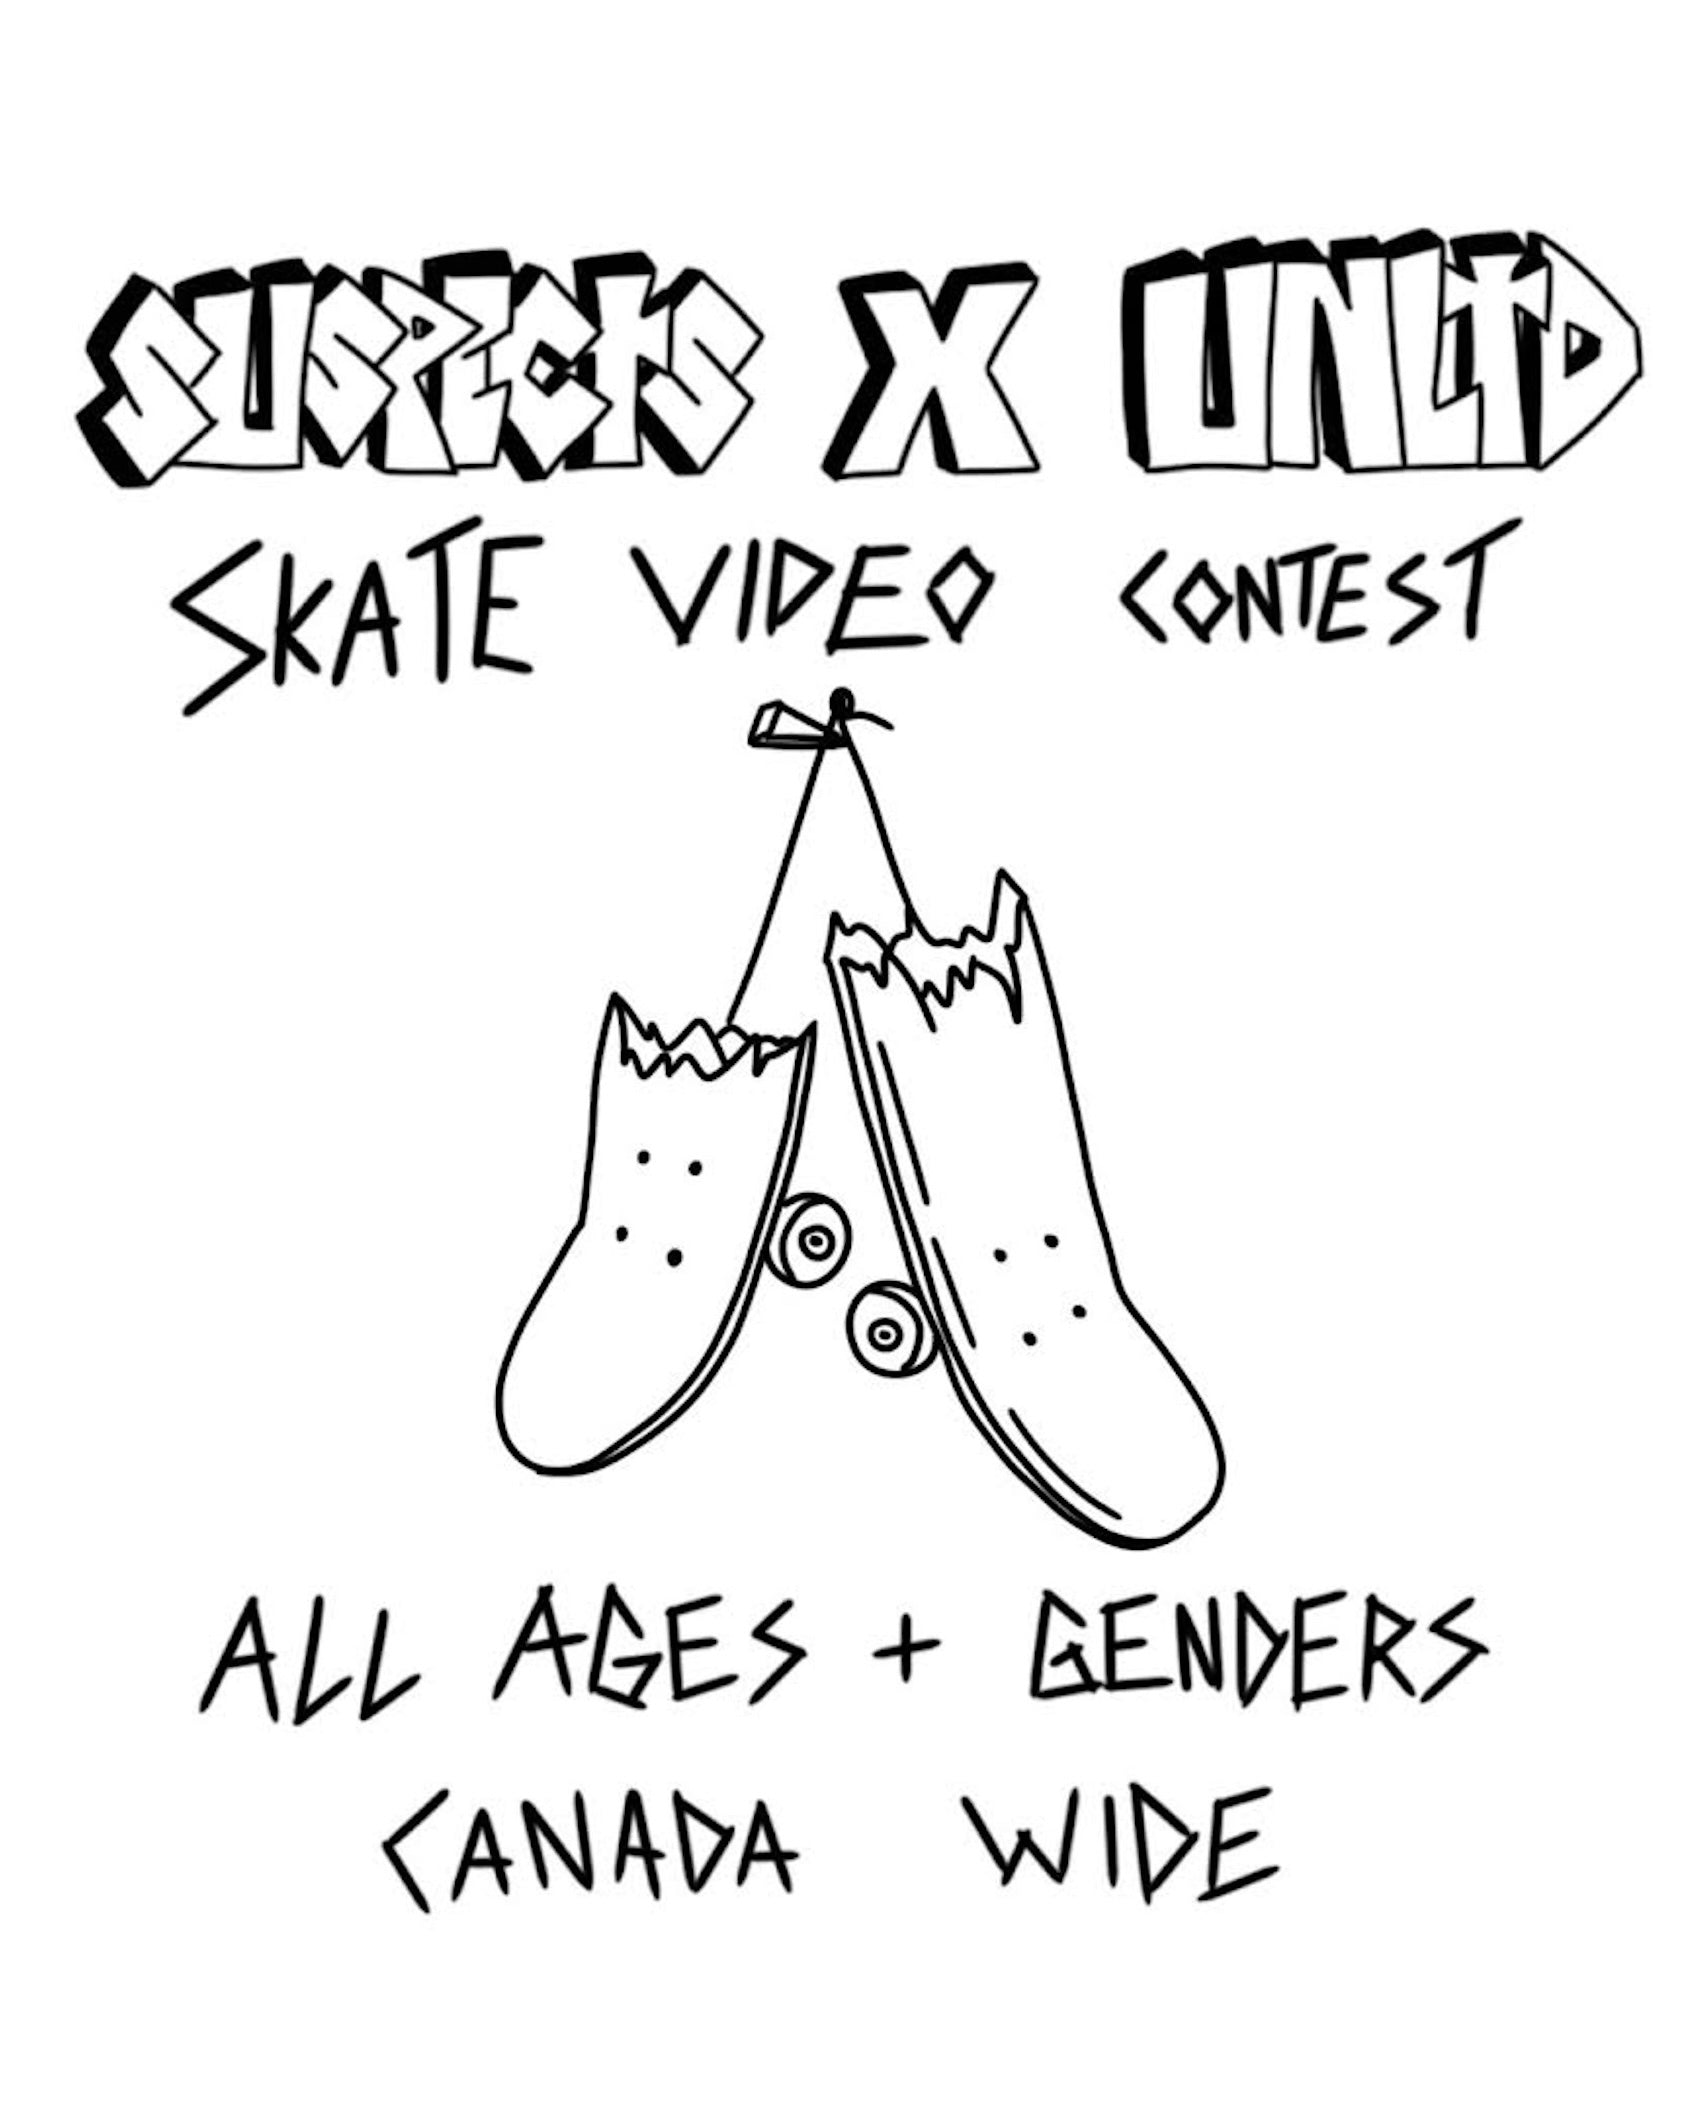 Skate Video Contest